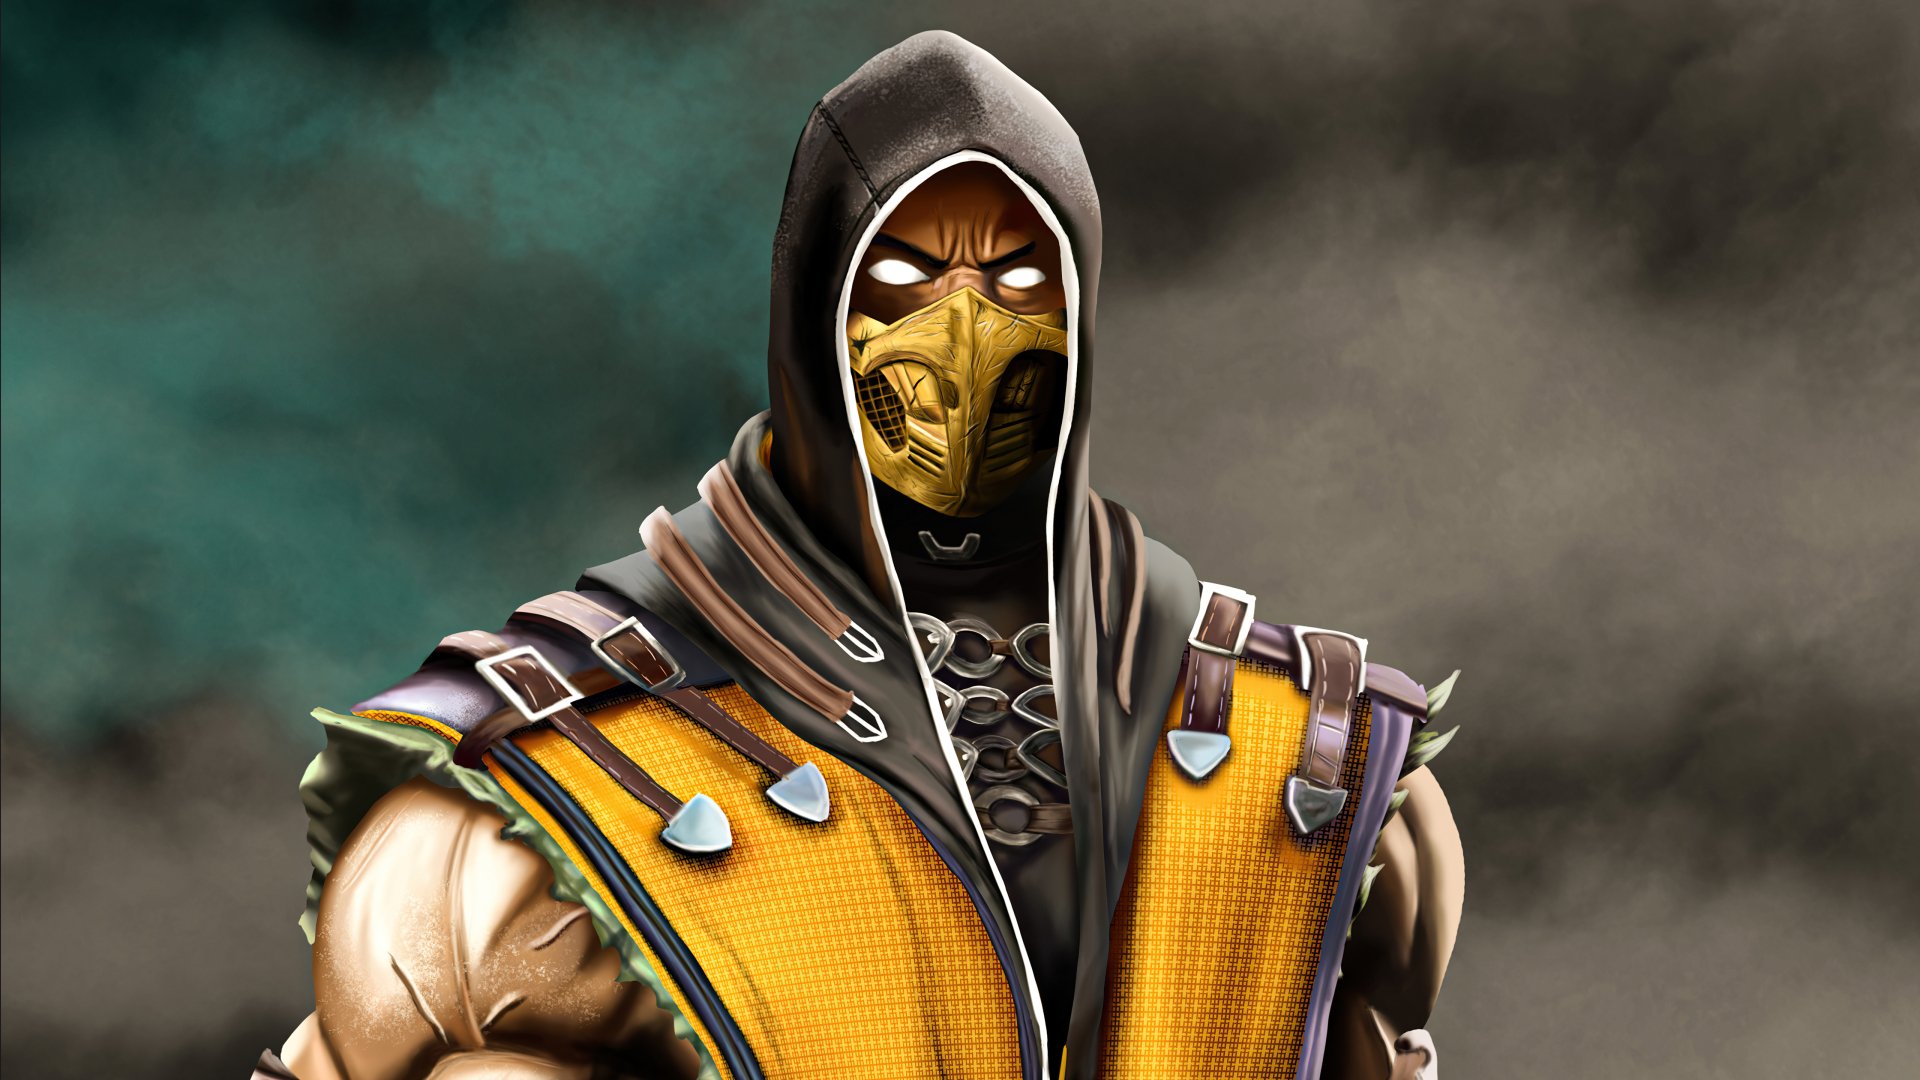 Mortal Kombat 4k Ultra Hd Wallpaper Background Image 5120x2880 9167